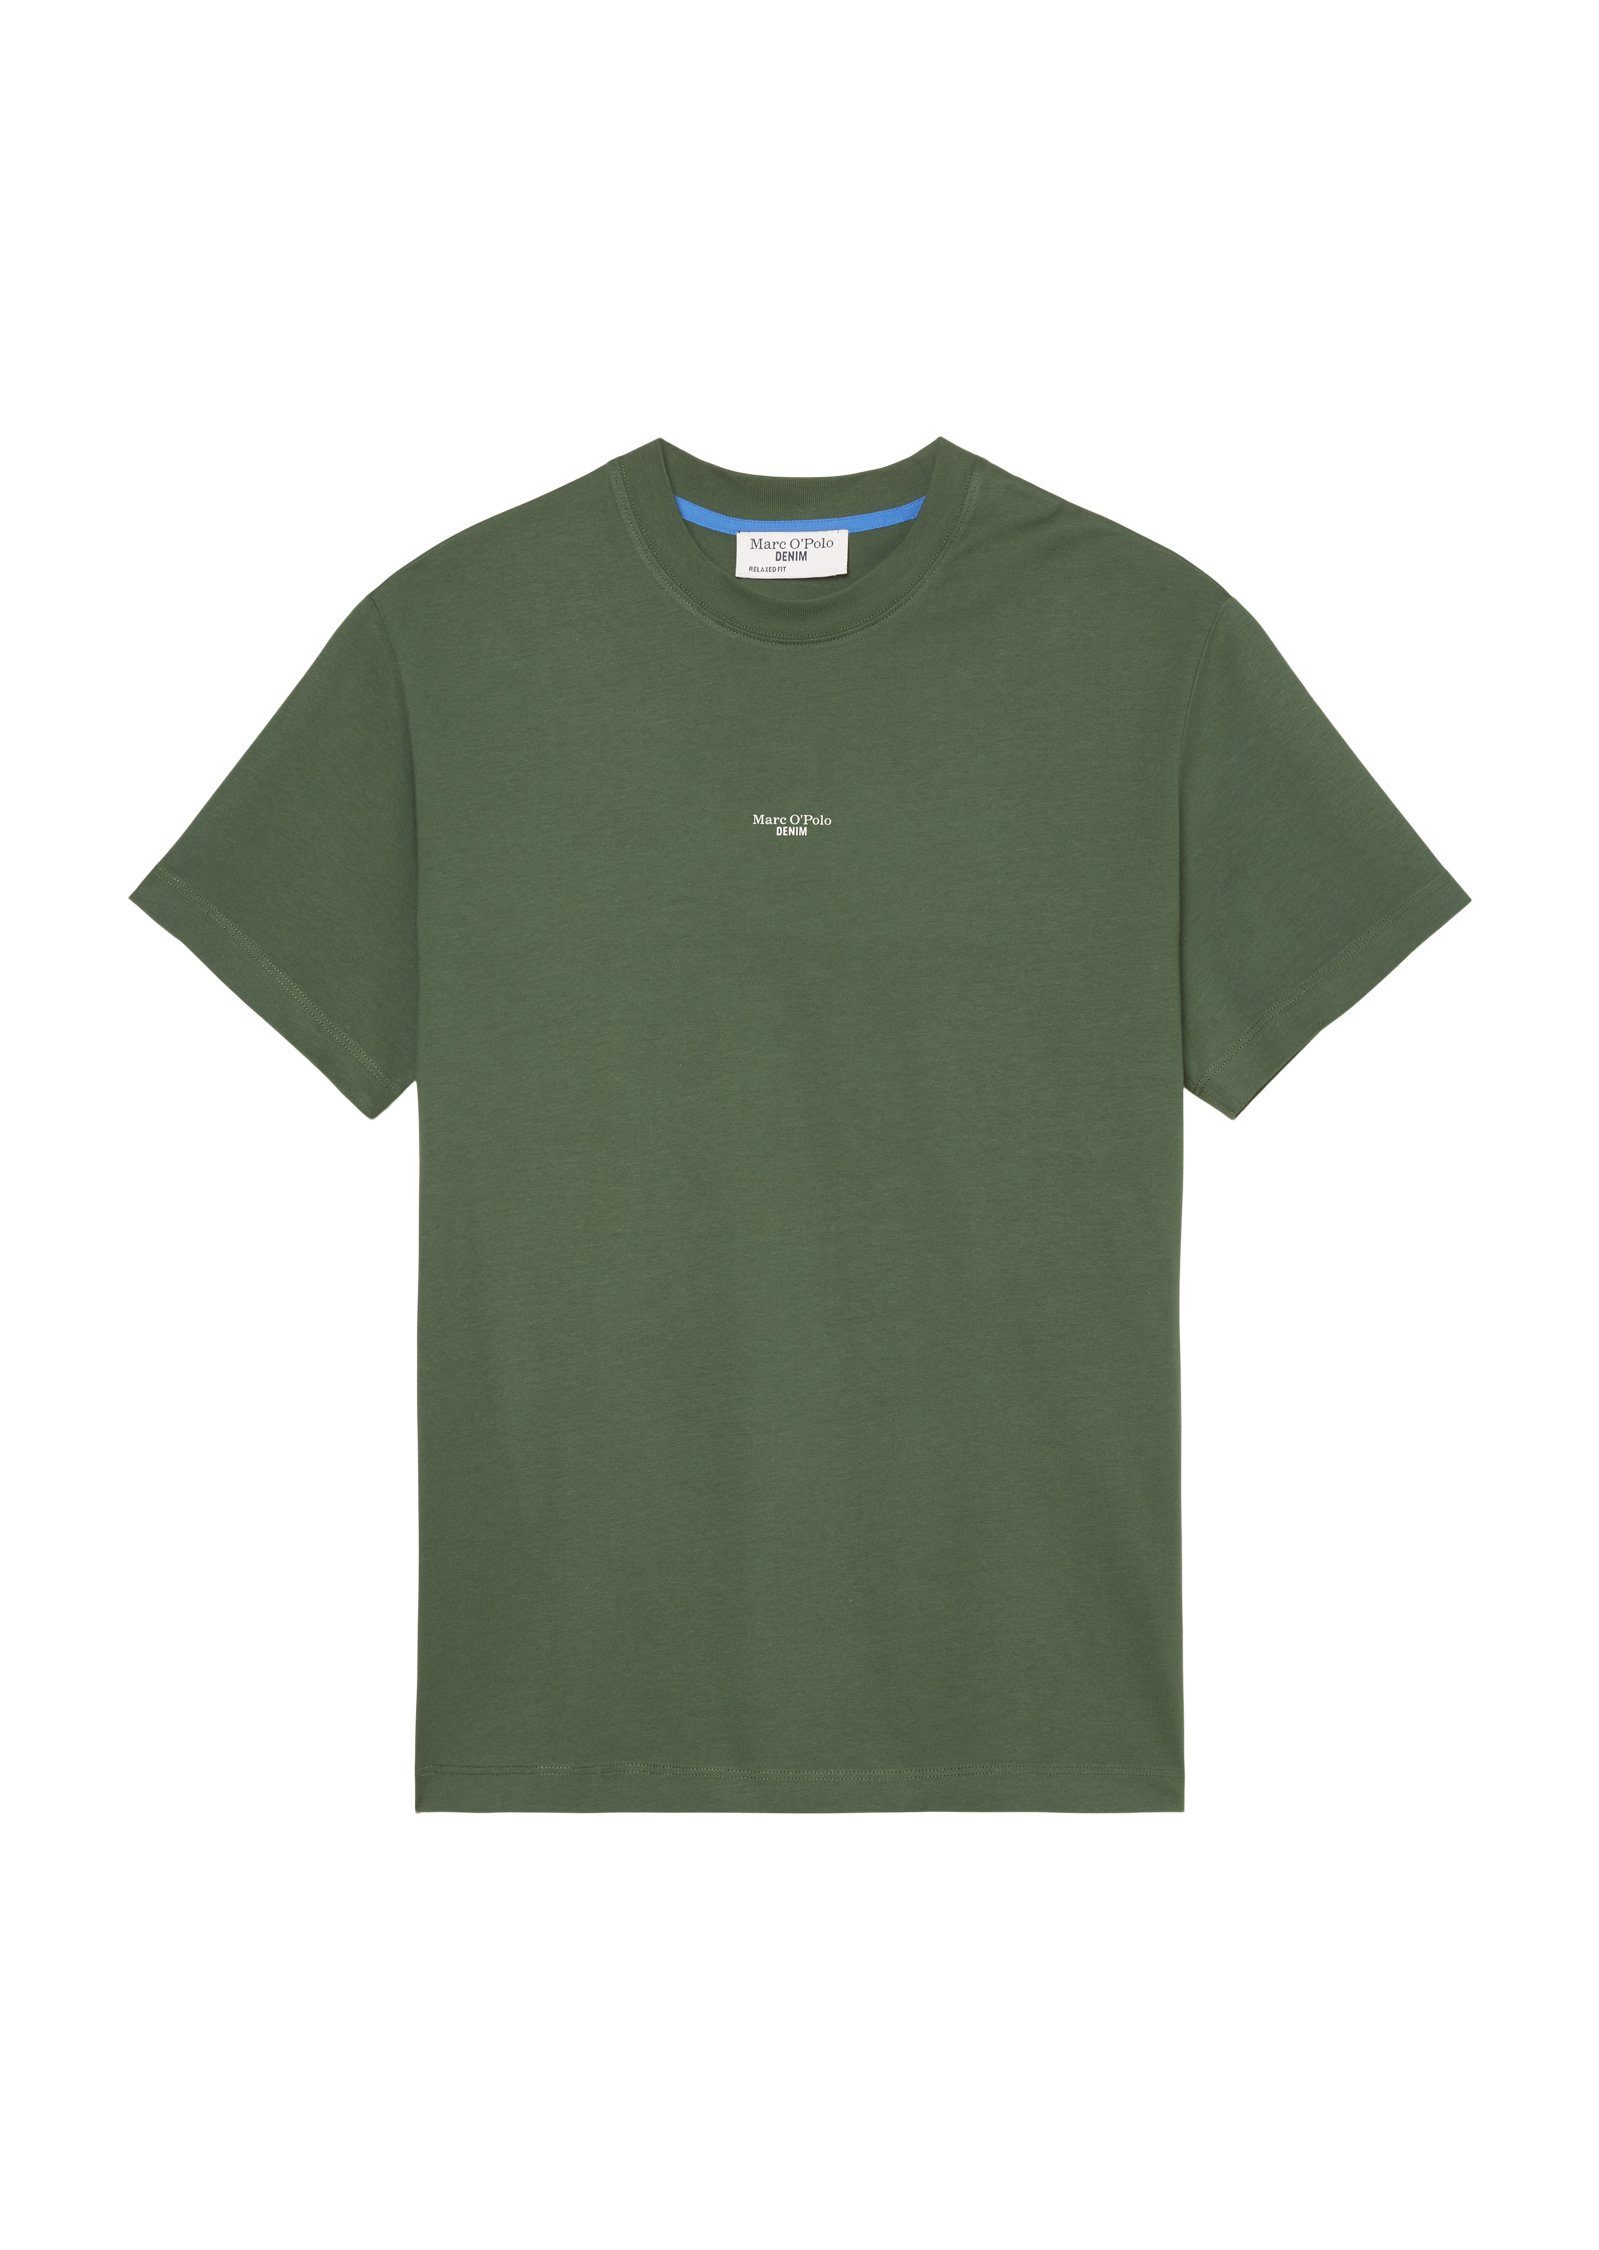 Marc O'Polo DENIM T-Shirt mit Logo-Druck kleinem green splendor